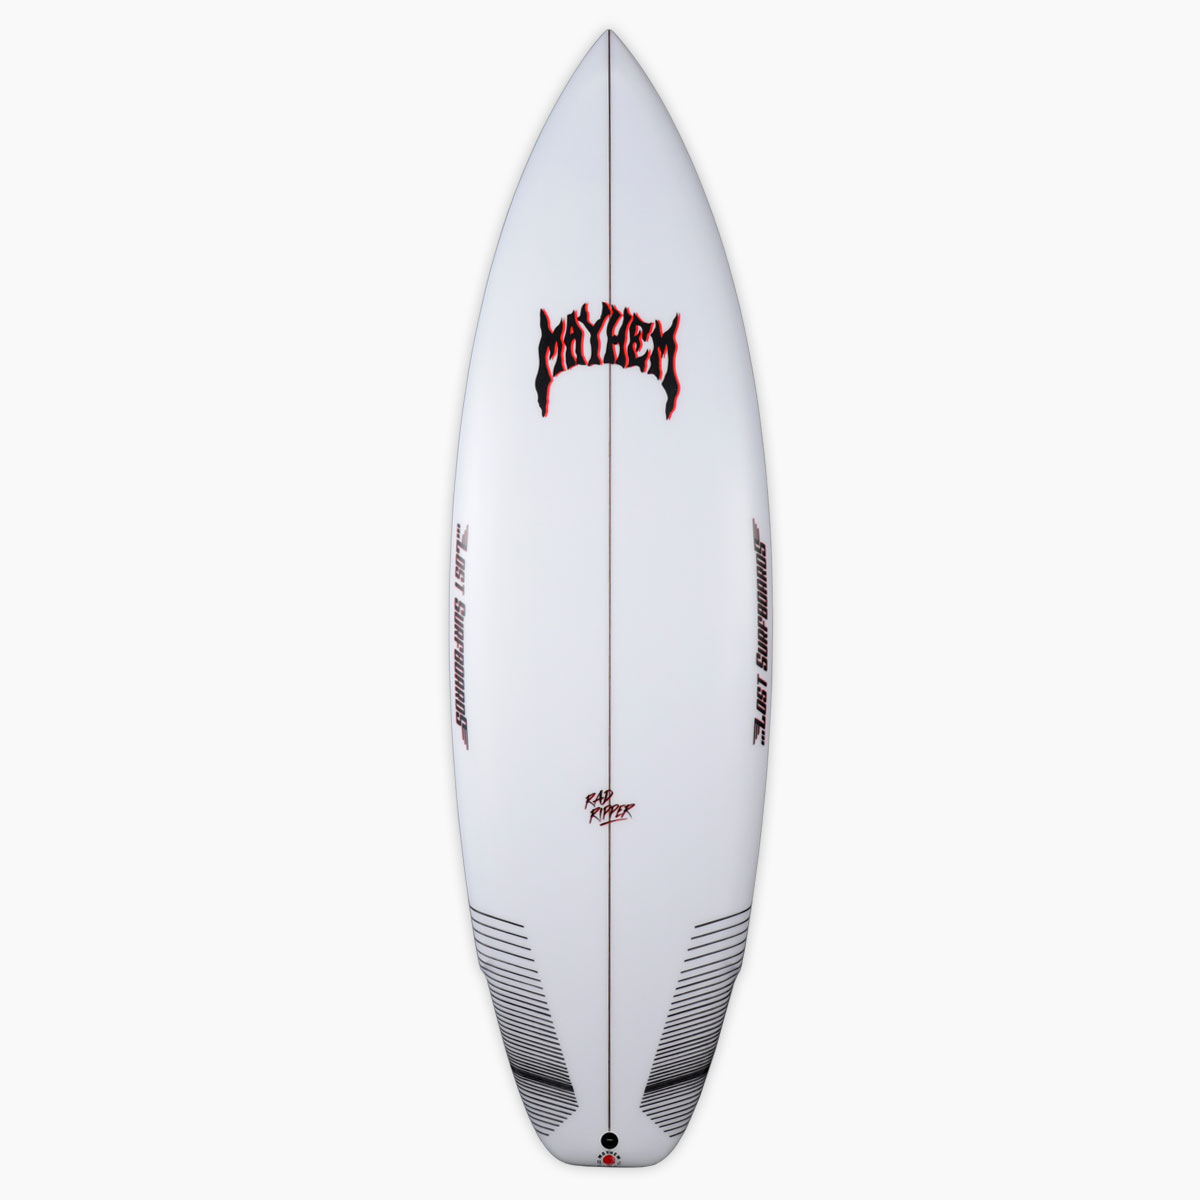 SurfBoardNet / ブランド:LOST SURFBOARDS モデル:Mayhem × M.R 